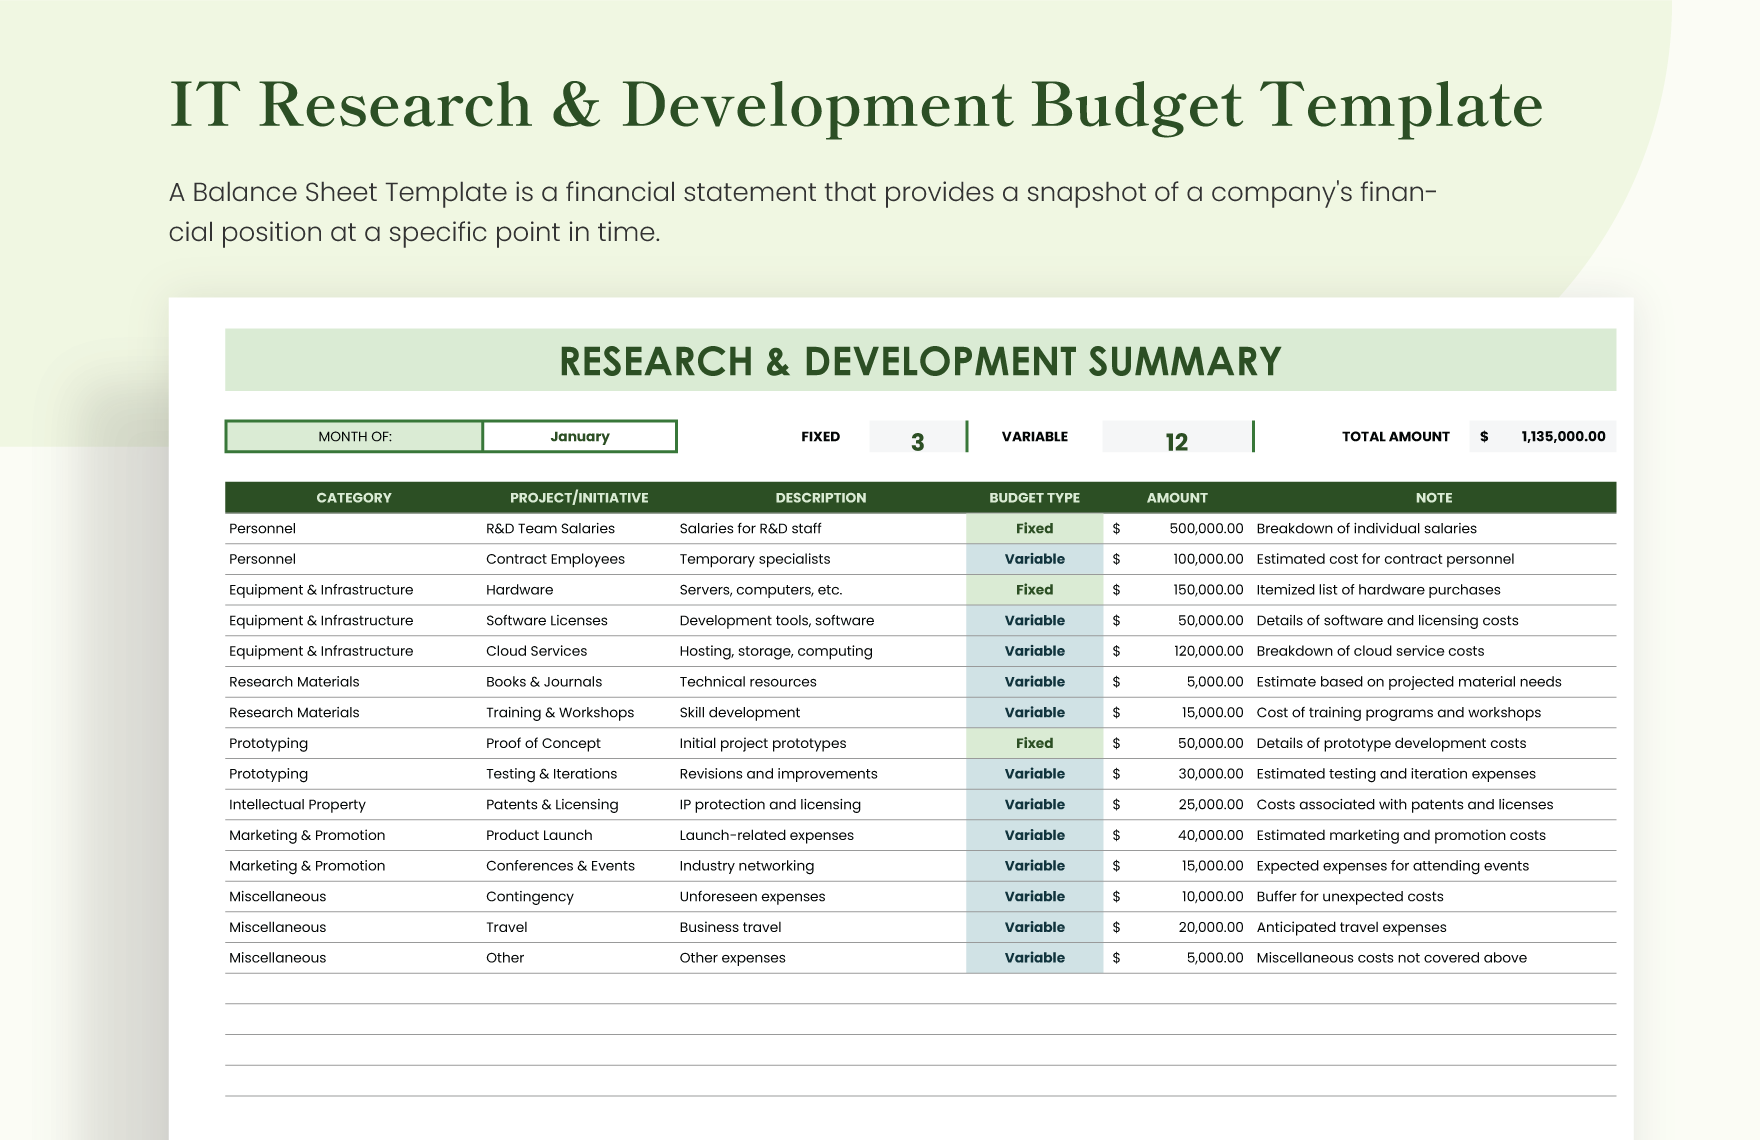 IT Research & Development Budget Template